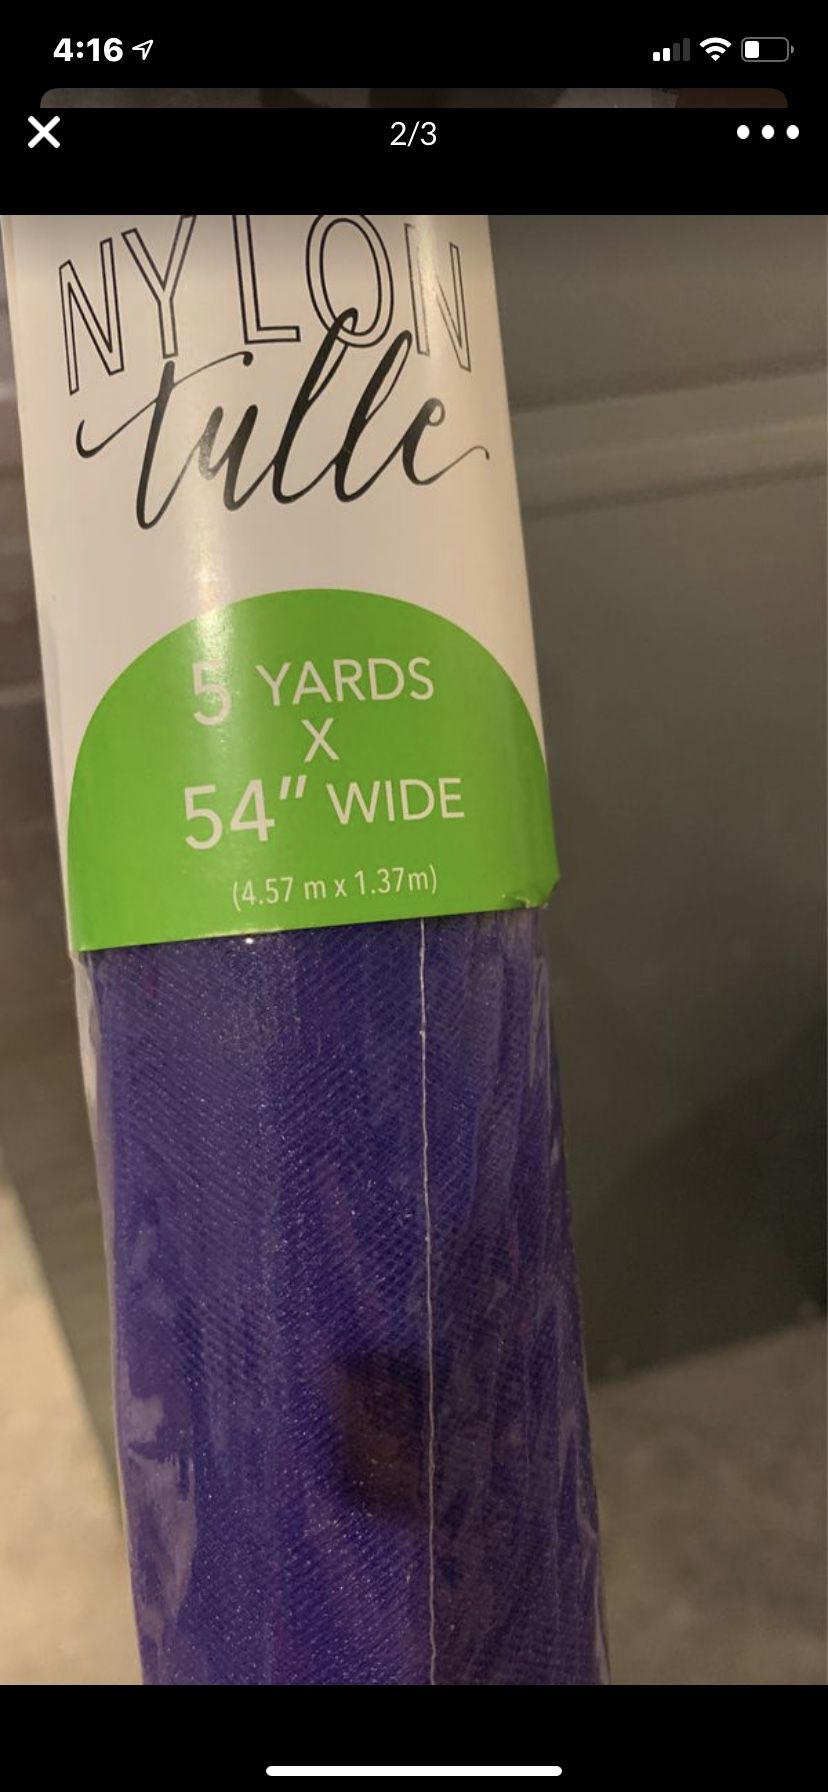 Brand new Purple nylon tulle 5 yards x 54” wide